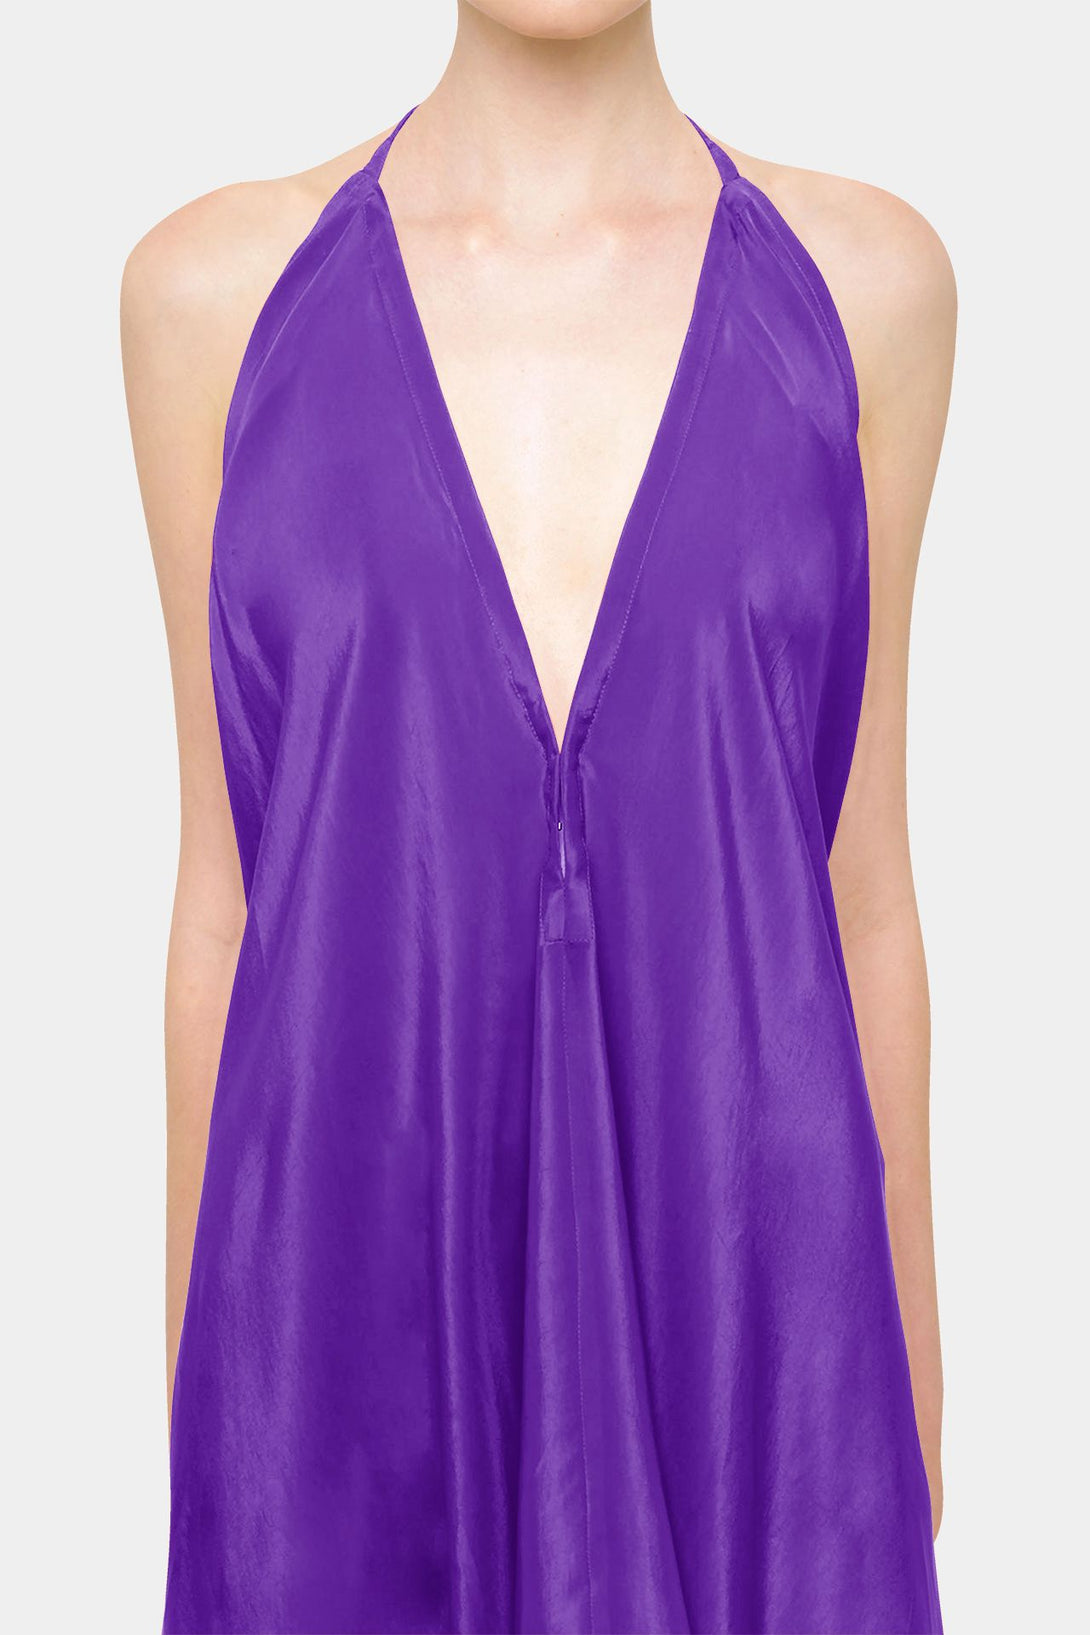  short dress purple, Shahida Parides, sexy short frock, sexiest short dresses,